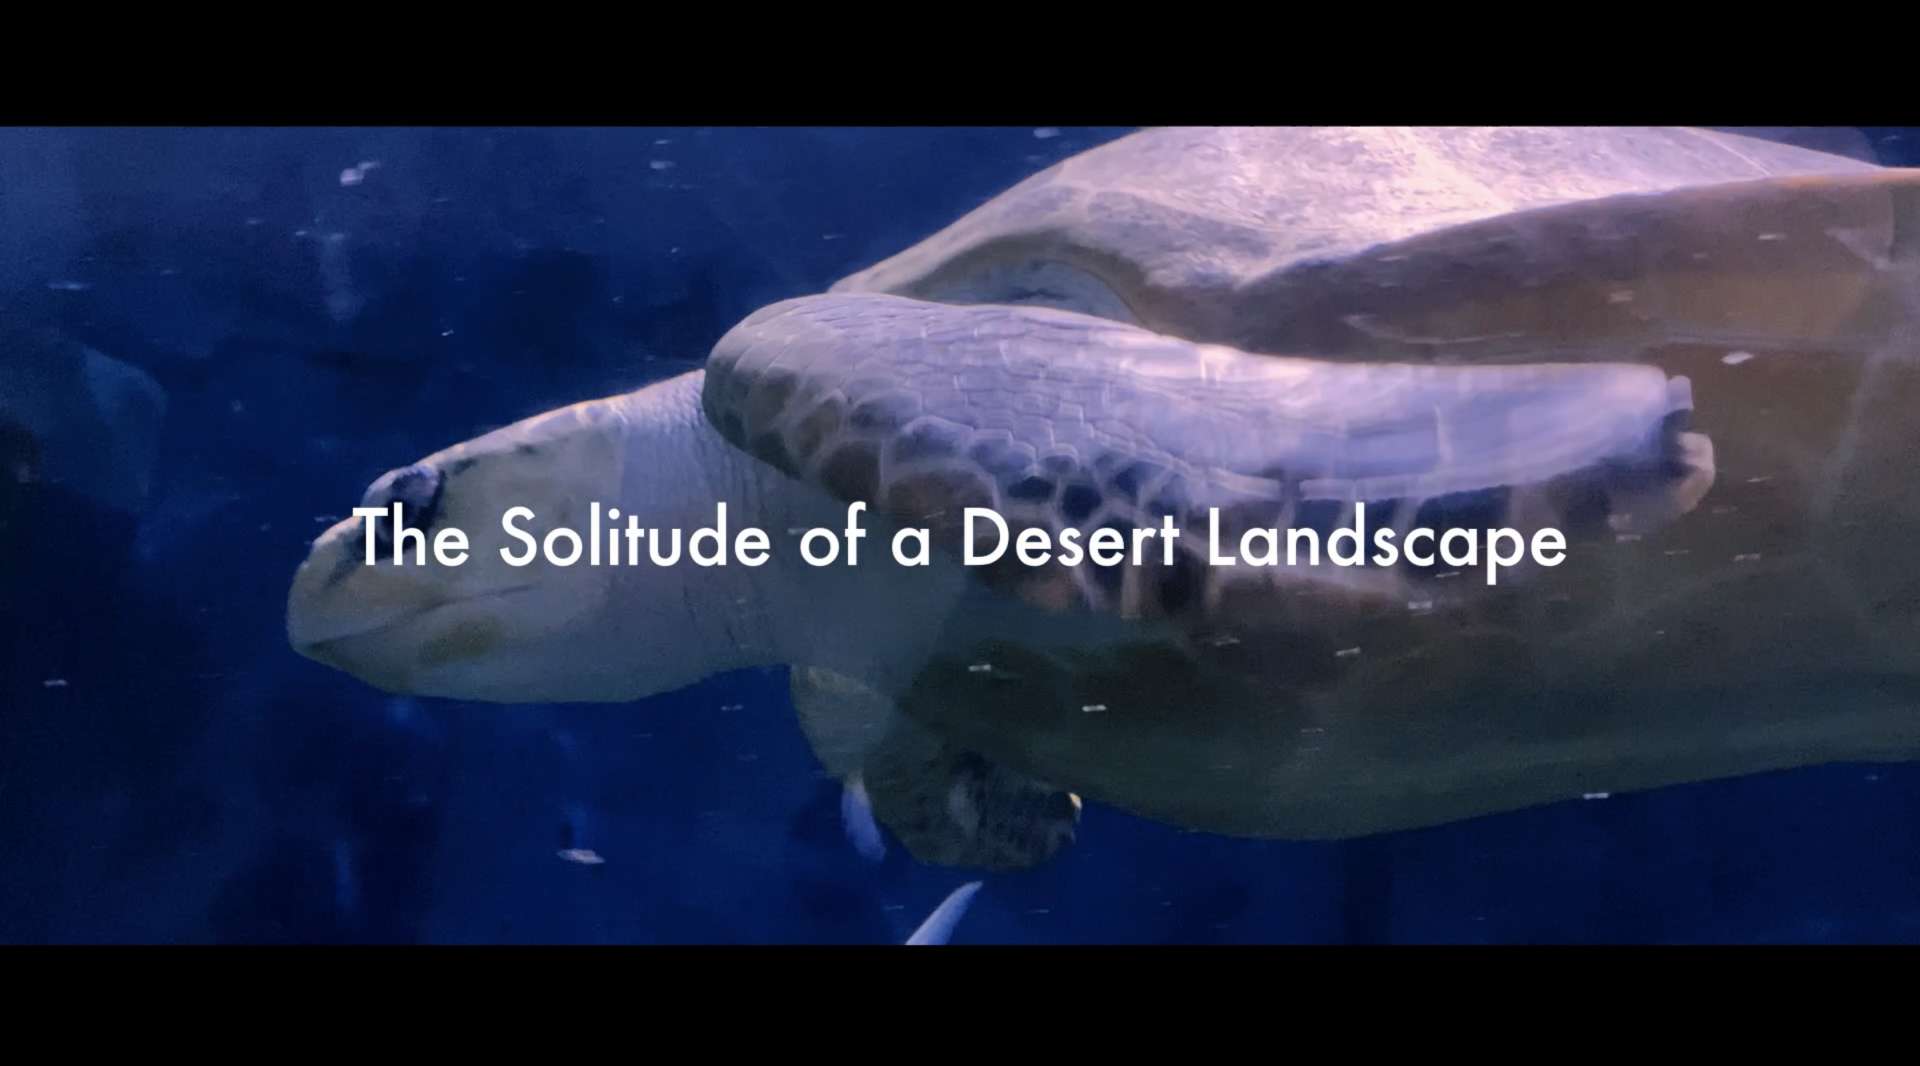 视觉诗 - 孤独沙漠之景The Solitude of a Desert Landscape